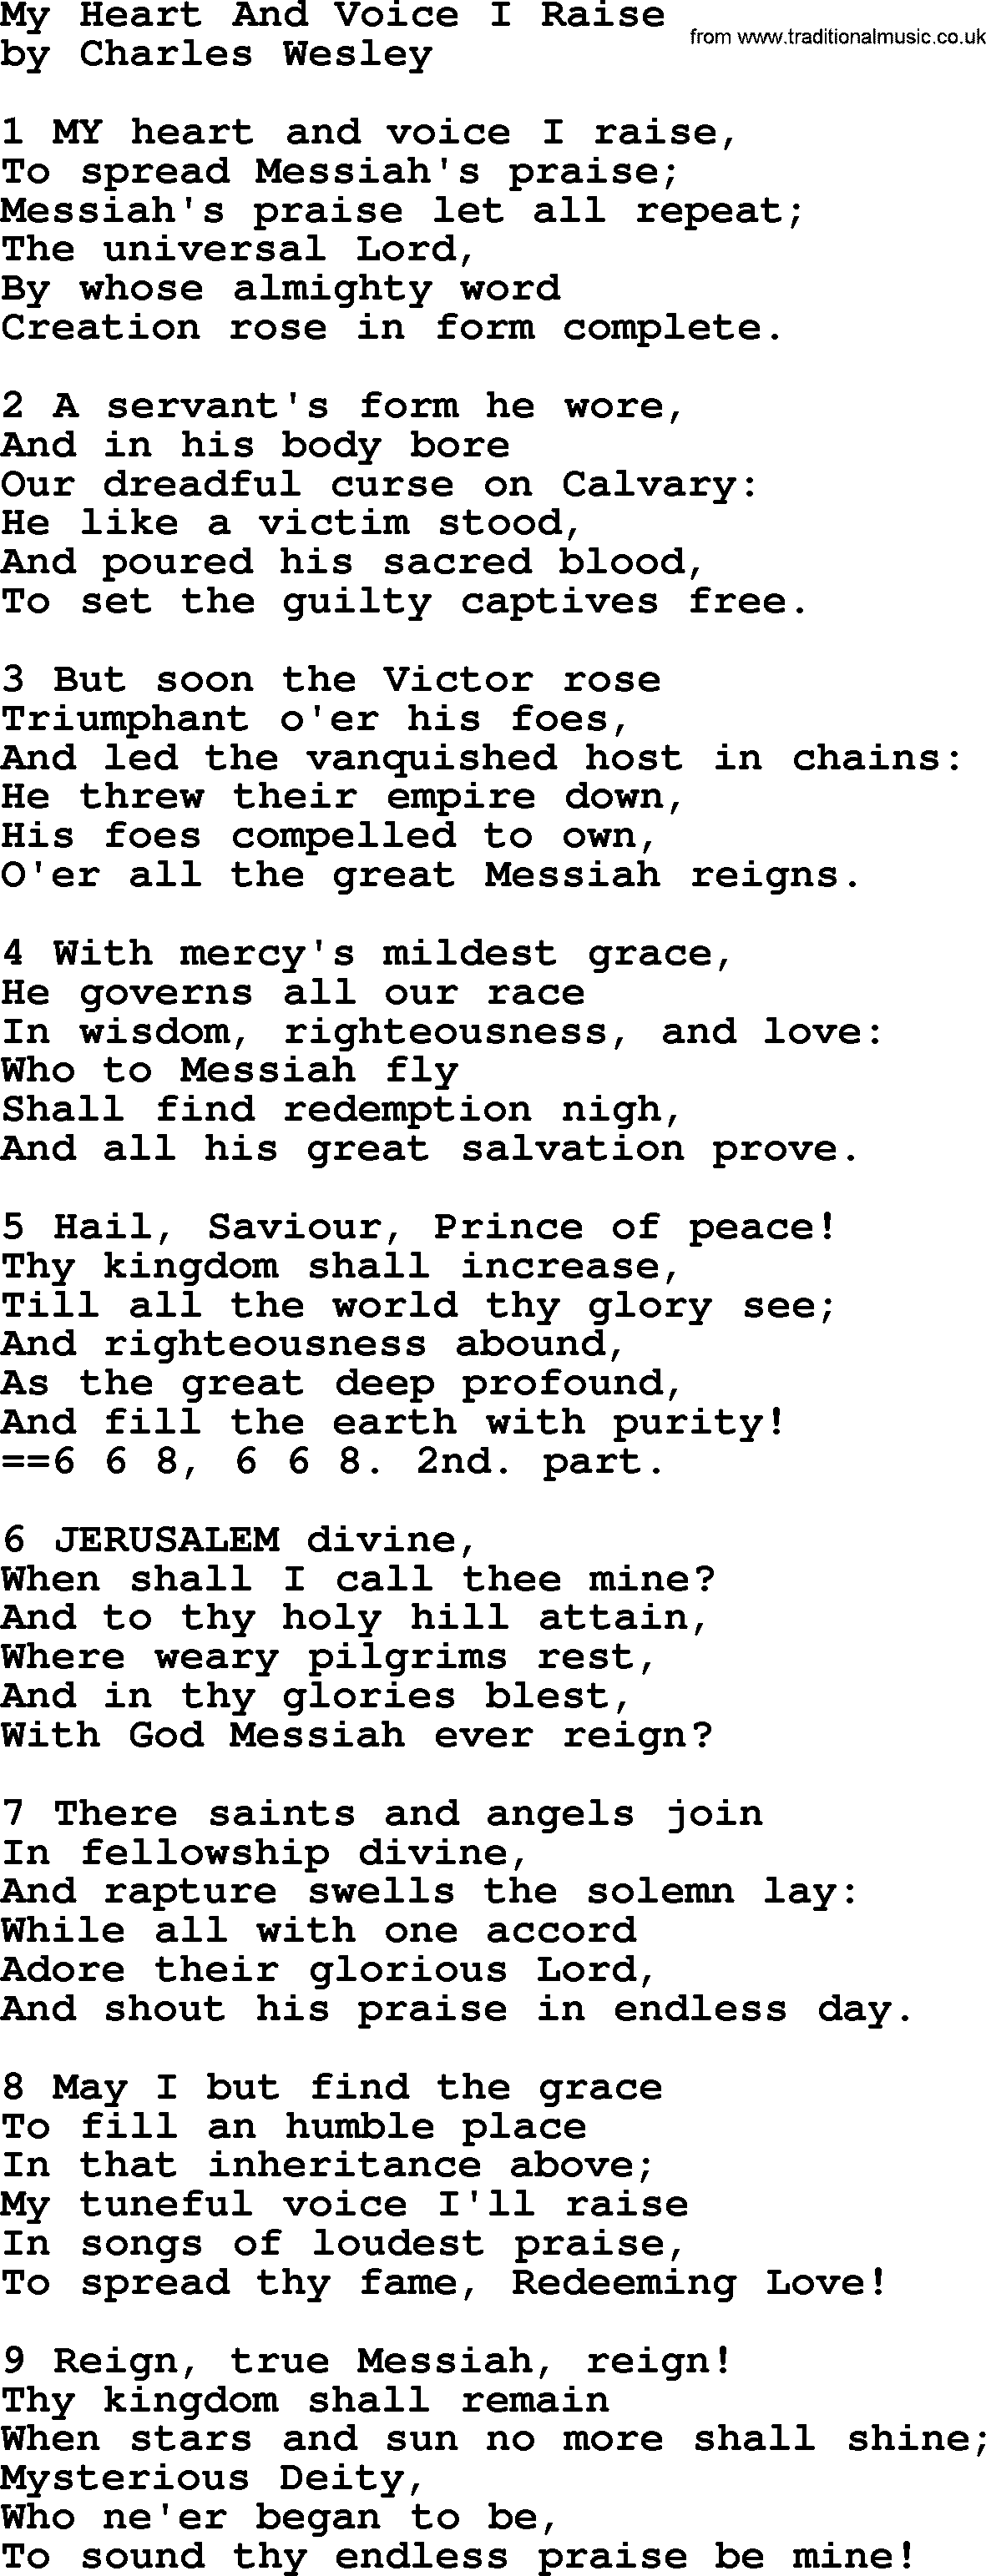 Charles Wesley hymn: My Heart And Voice I Raise, lyrics